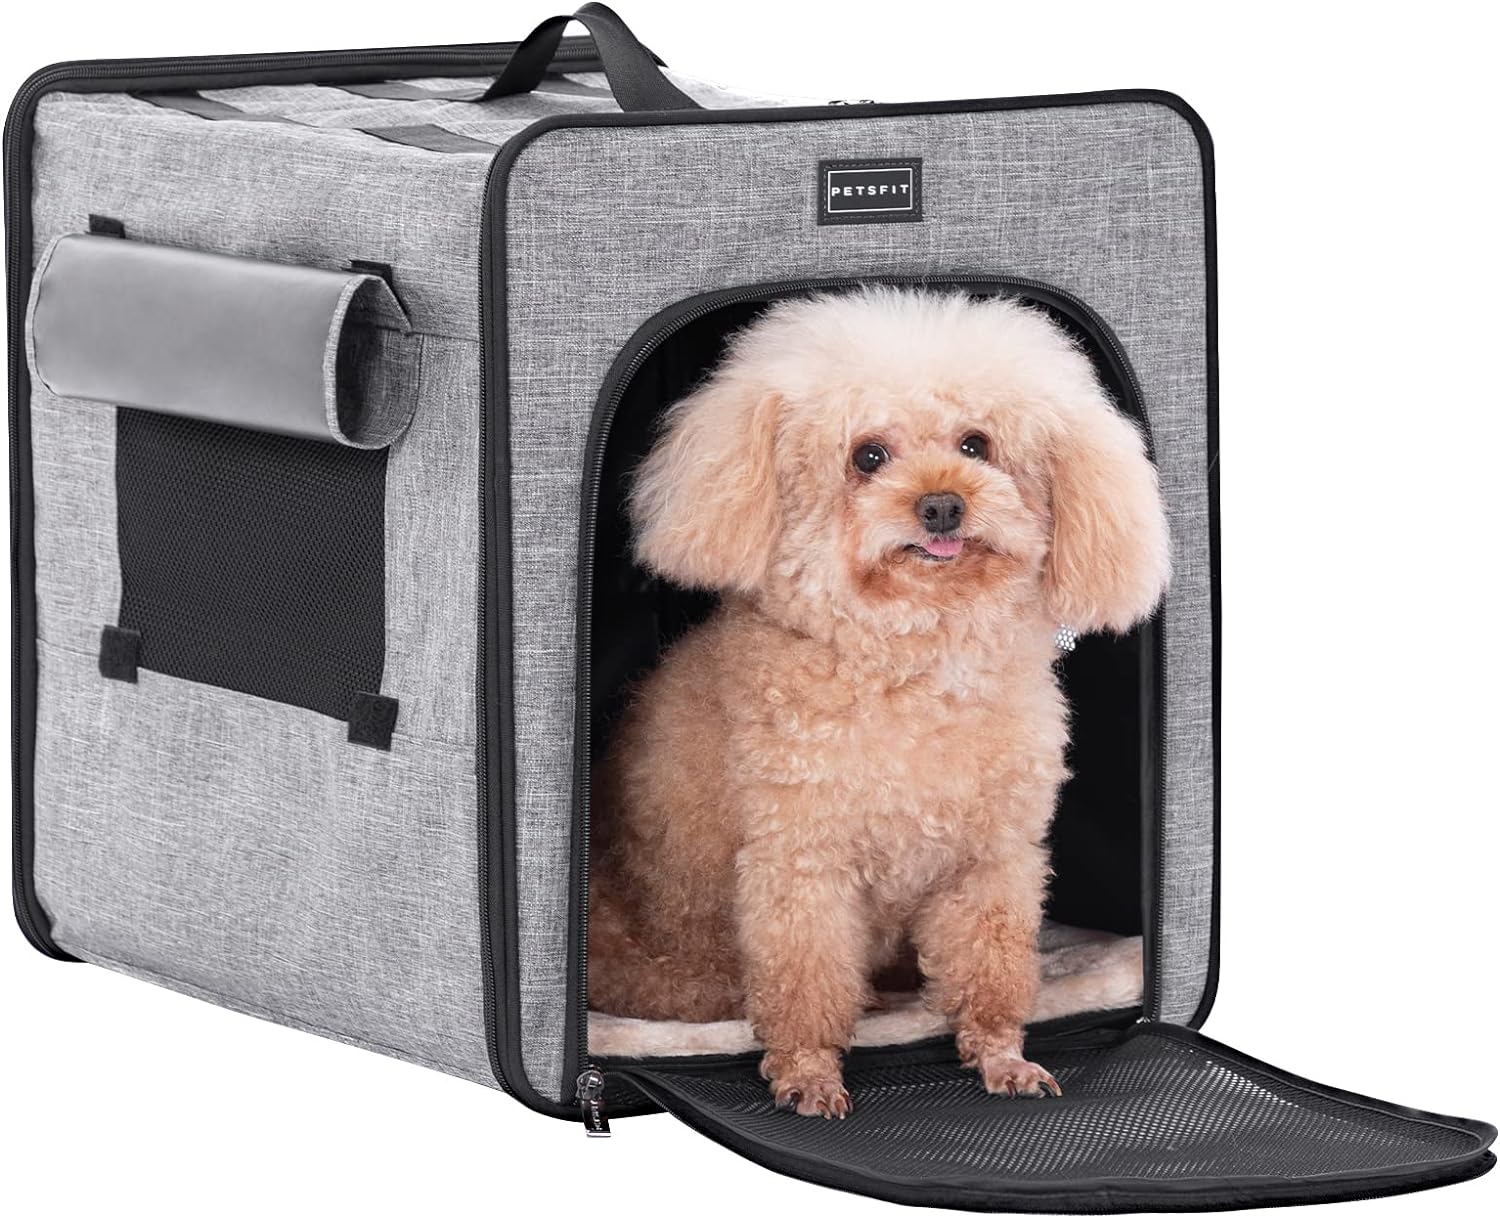 Full Ventilation Lightweight Aluminum Dog K9 Crate 